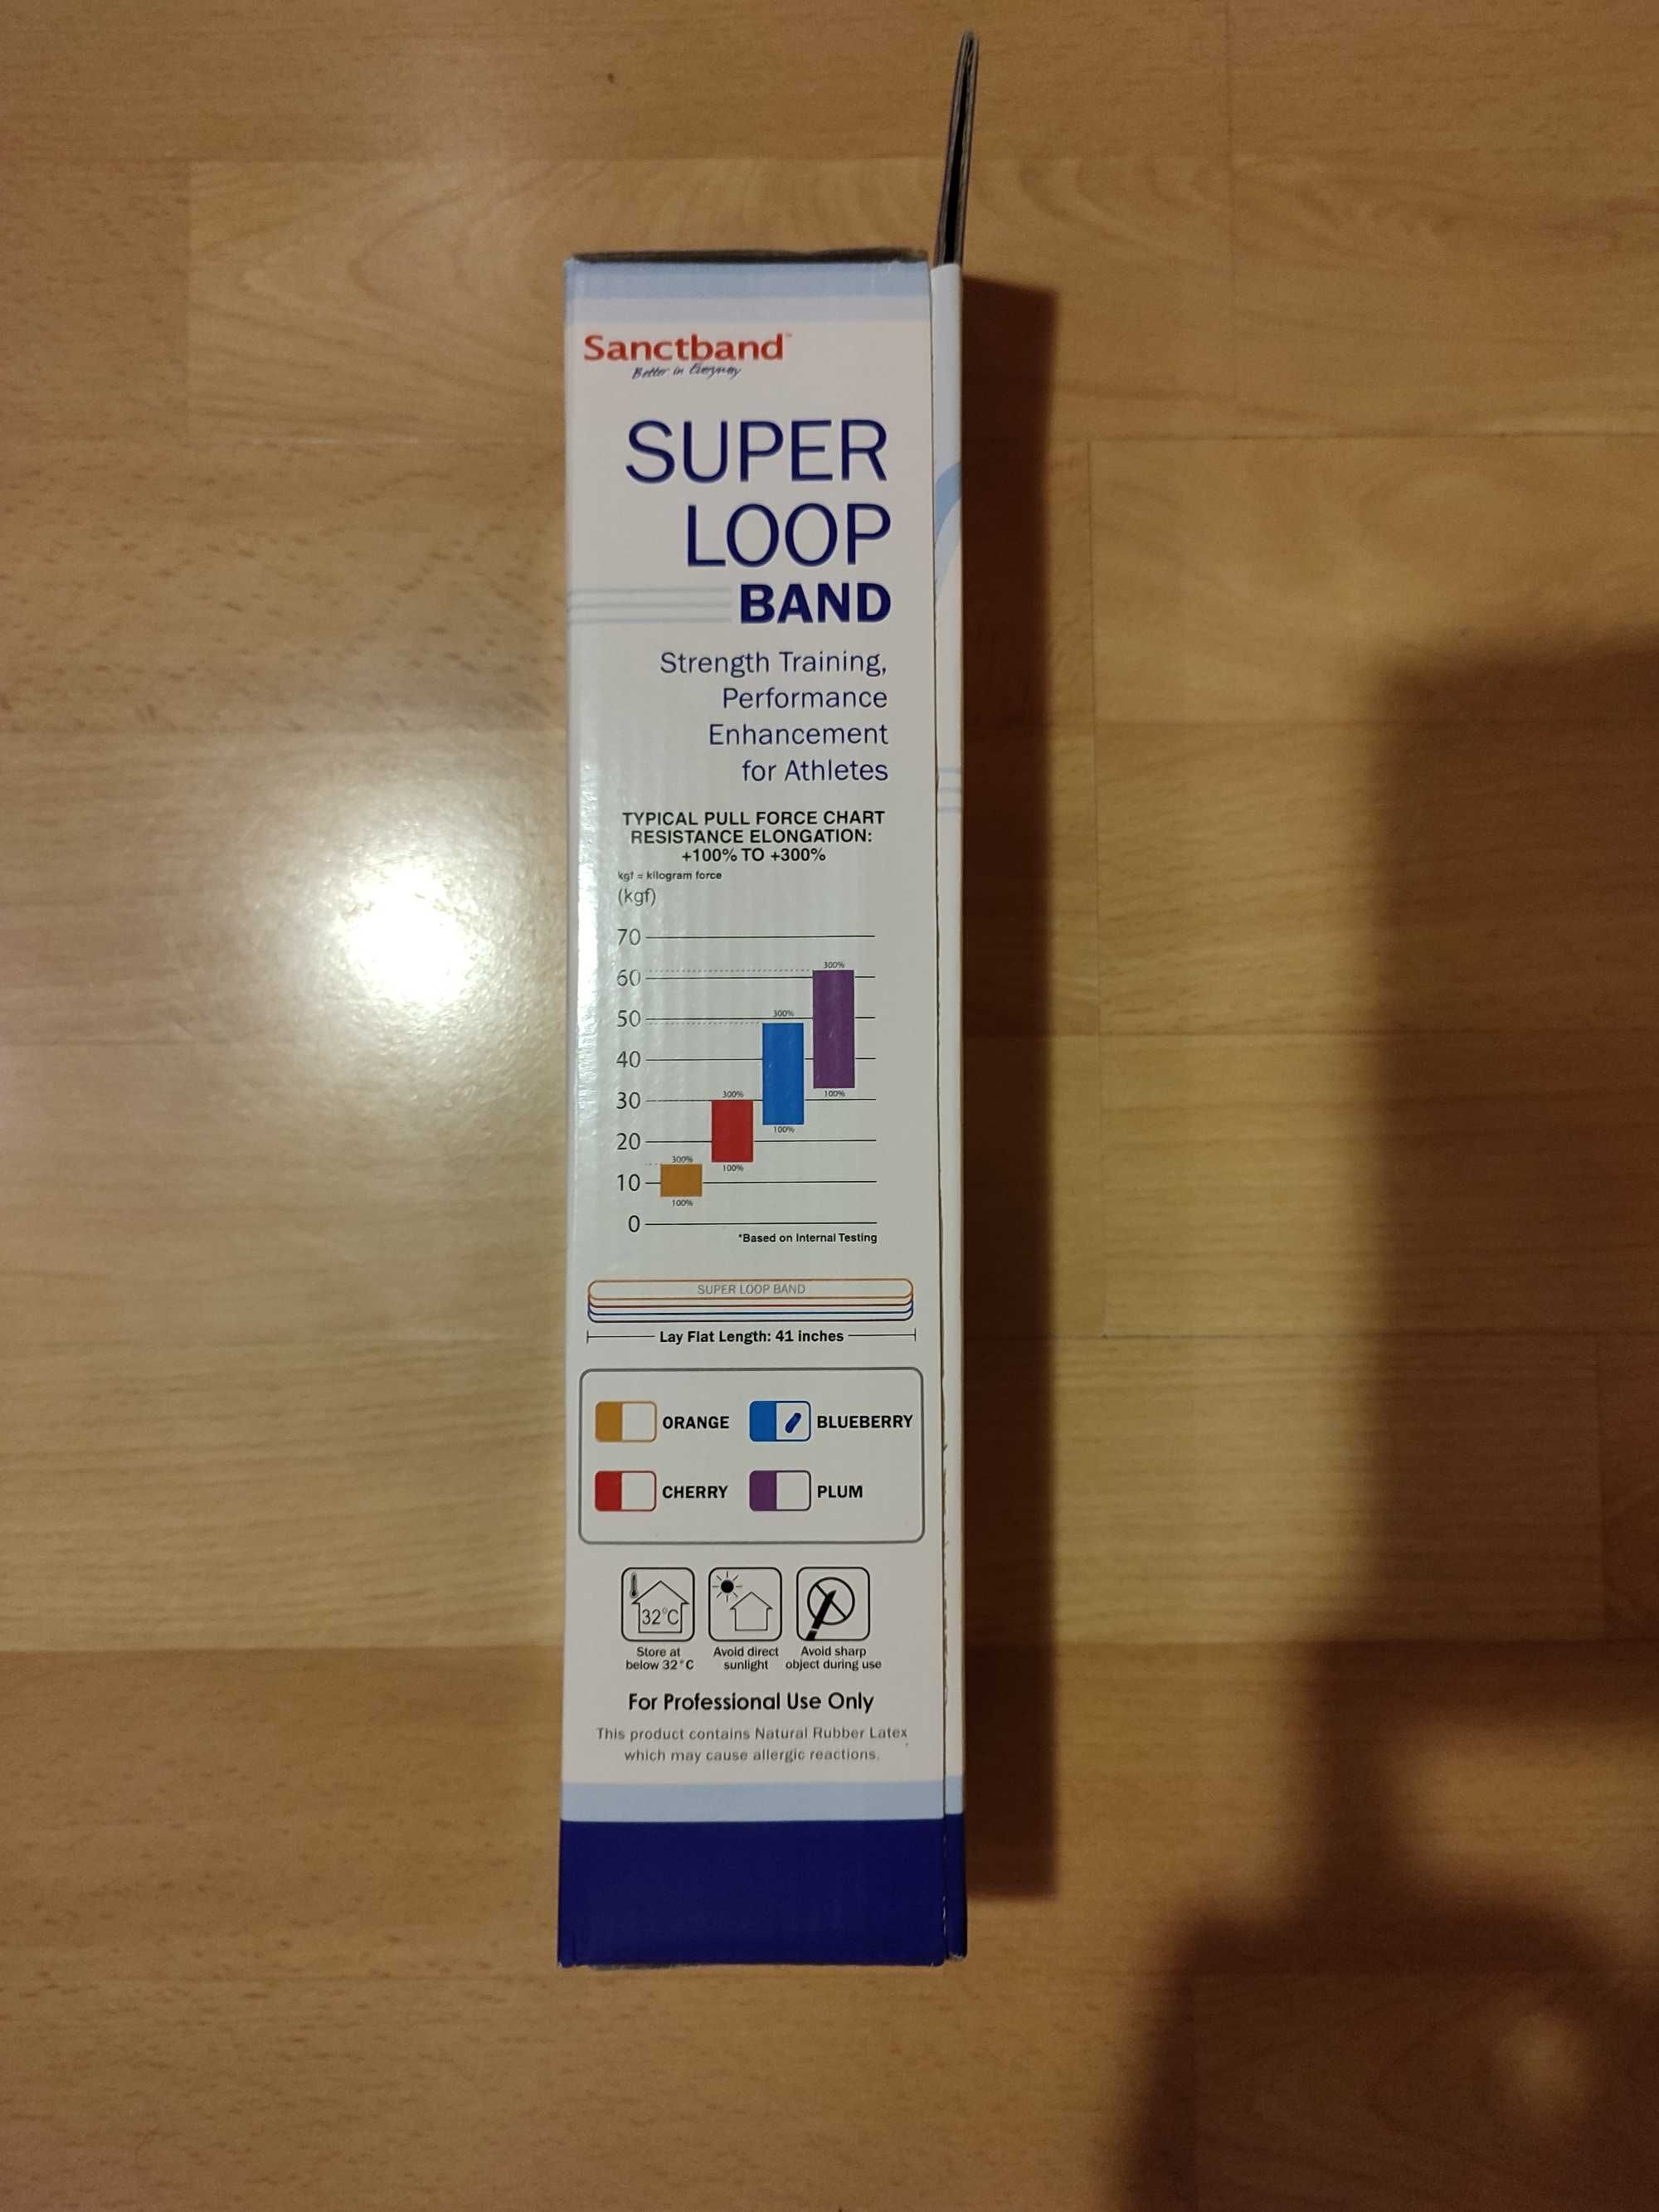 Super Loop Band Sanctband - niebieska taśma do ćwiczeń